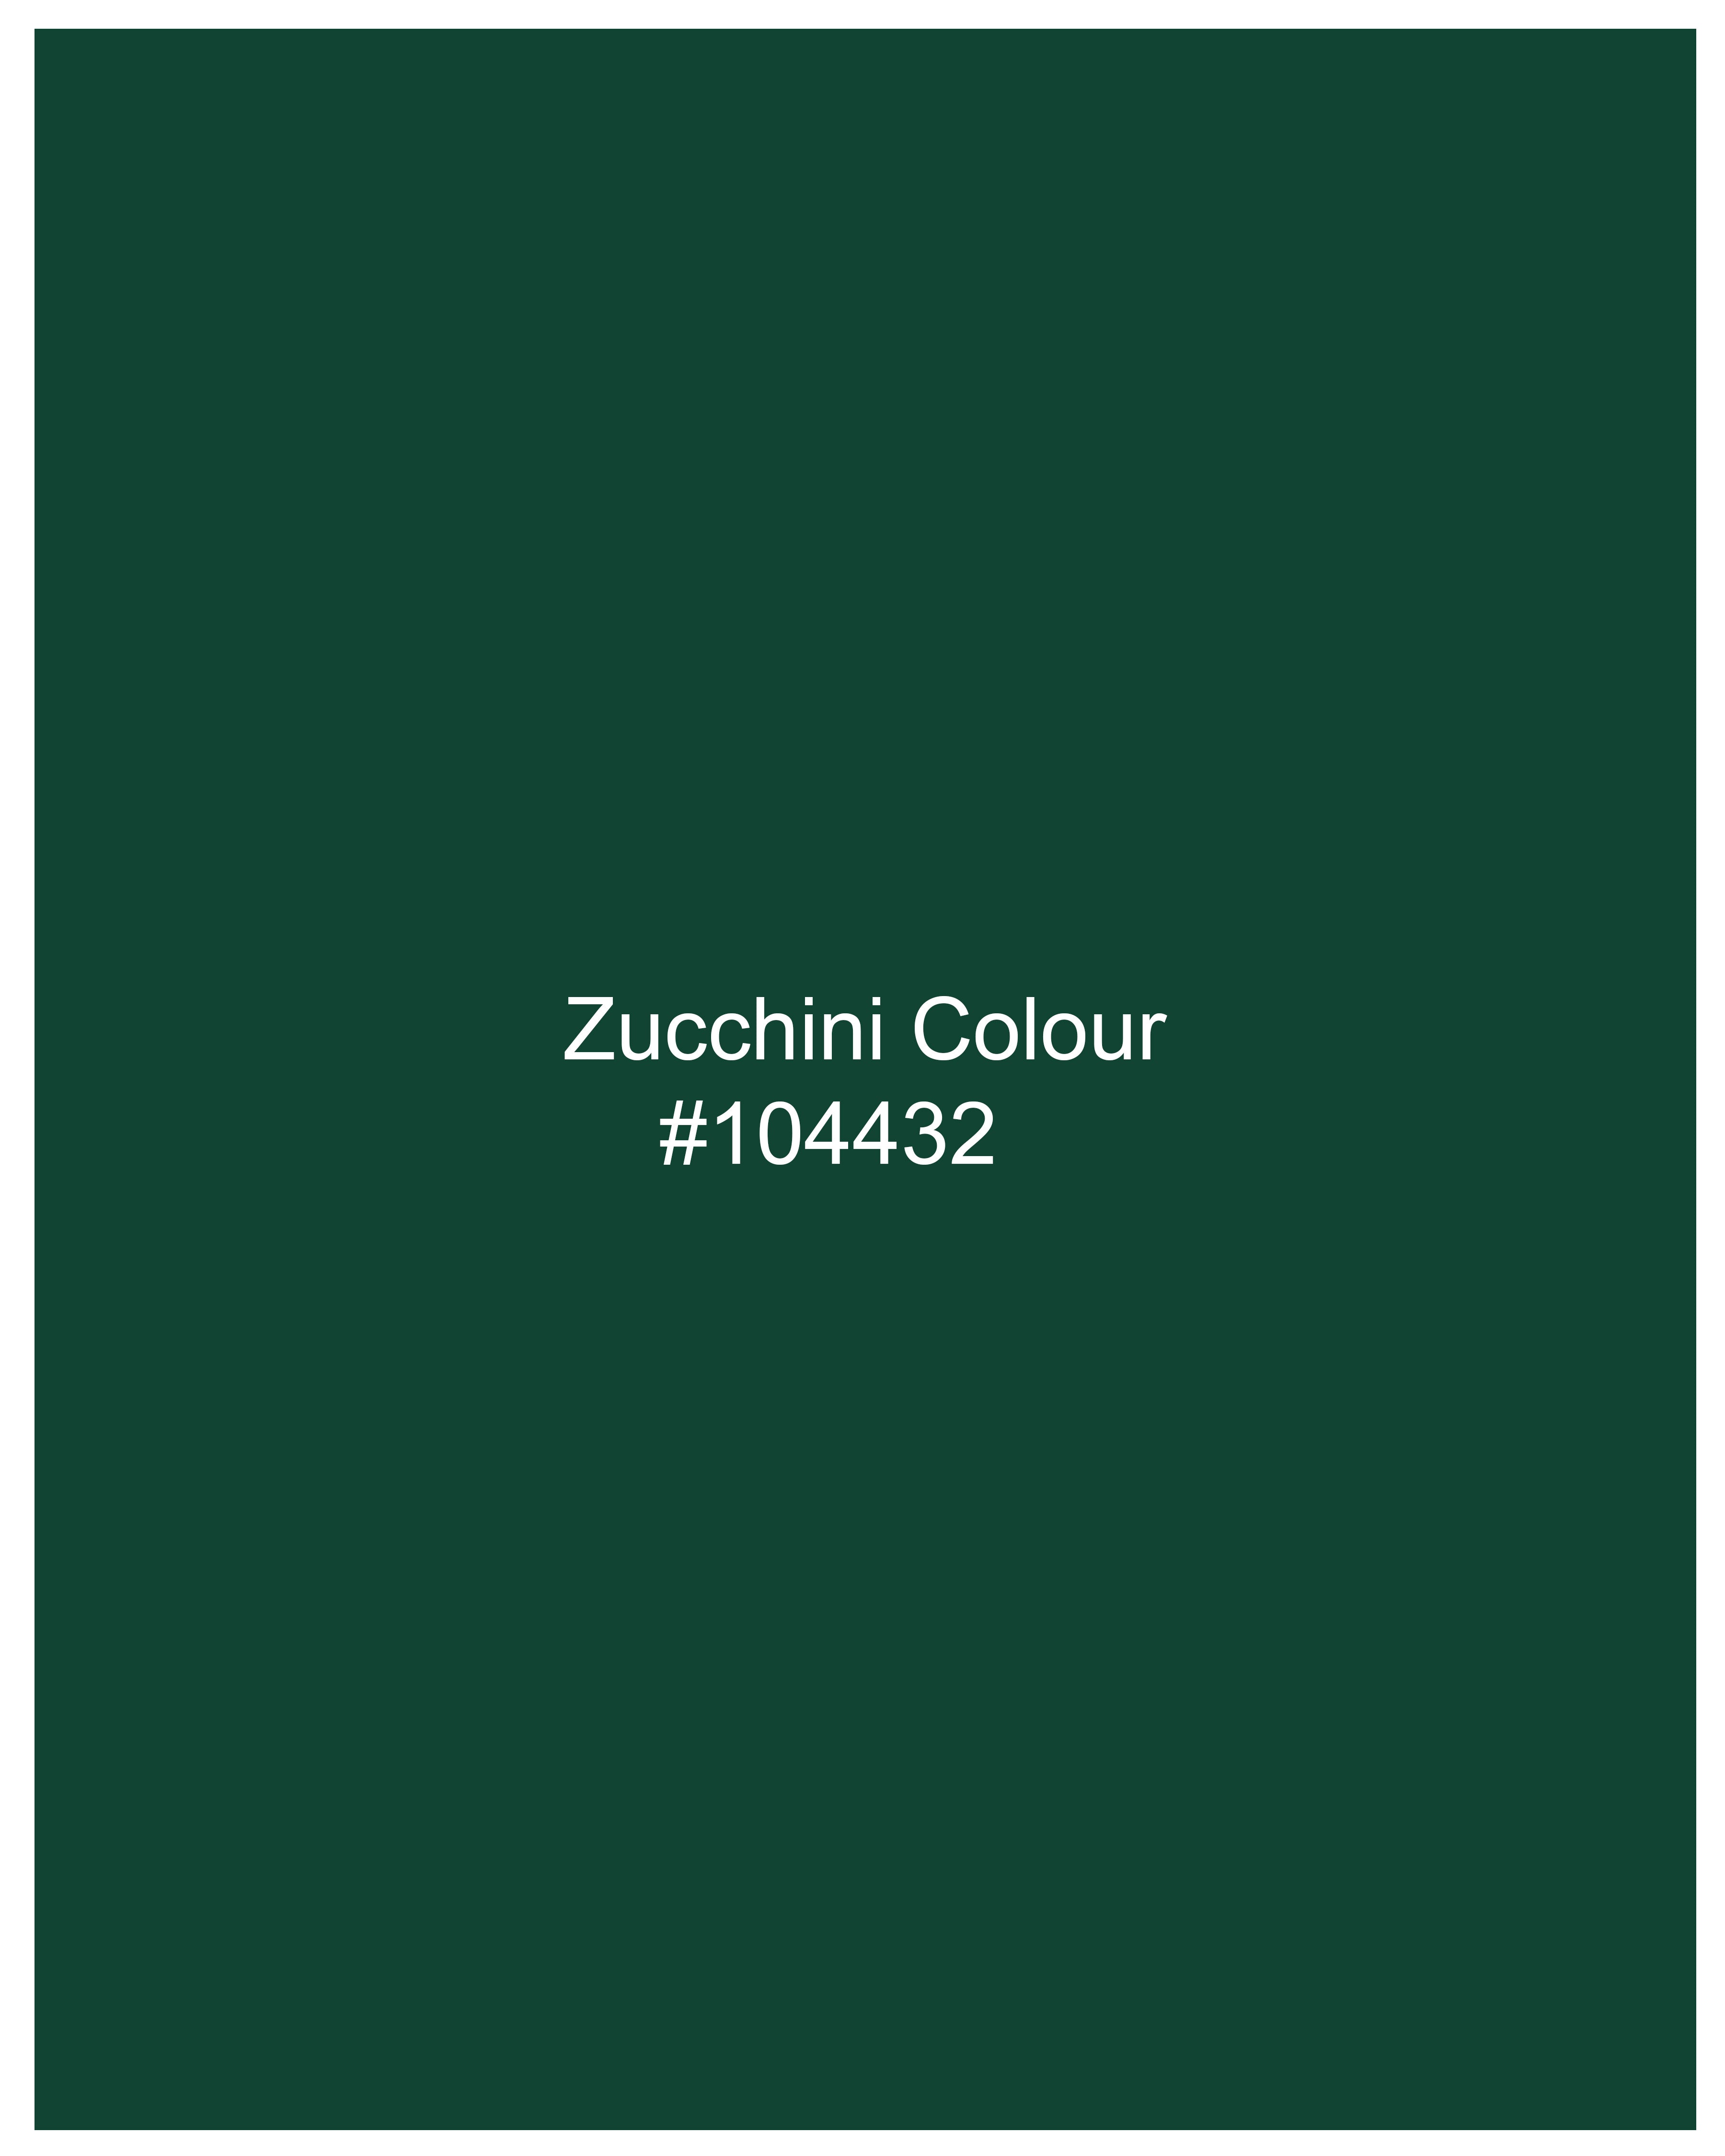 Zucchini Dark Green Twill Premium Cotton Designer Overshirt 9240-CA-OS-P278-38,9240-CA-OS-P278-H-38,9240-CA-OS-P278-39,9240-CA-OS-P278-H-39,9240-CA-OS-P278-40,9240-CA-OS-P278-H-40,9240-CA-OS-P278-42,9240-CA-OS-P278-H-42,9240-CA-OS-P278-44,9240-CA-OS-P278-H-44,9240-CA-OS-P278-46,9240-CA-OS-P278-H-46,9240-CA-OS-P278-48,9240-CA-OS-P278-H-48,9240-CA-OS-P278-50,9240-CA-OS-P278-H-50,9240-CA-OS-P278-52,9240-CA-OS-P278-H-52